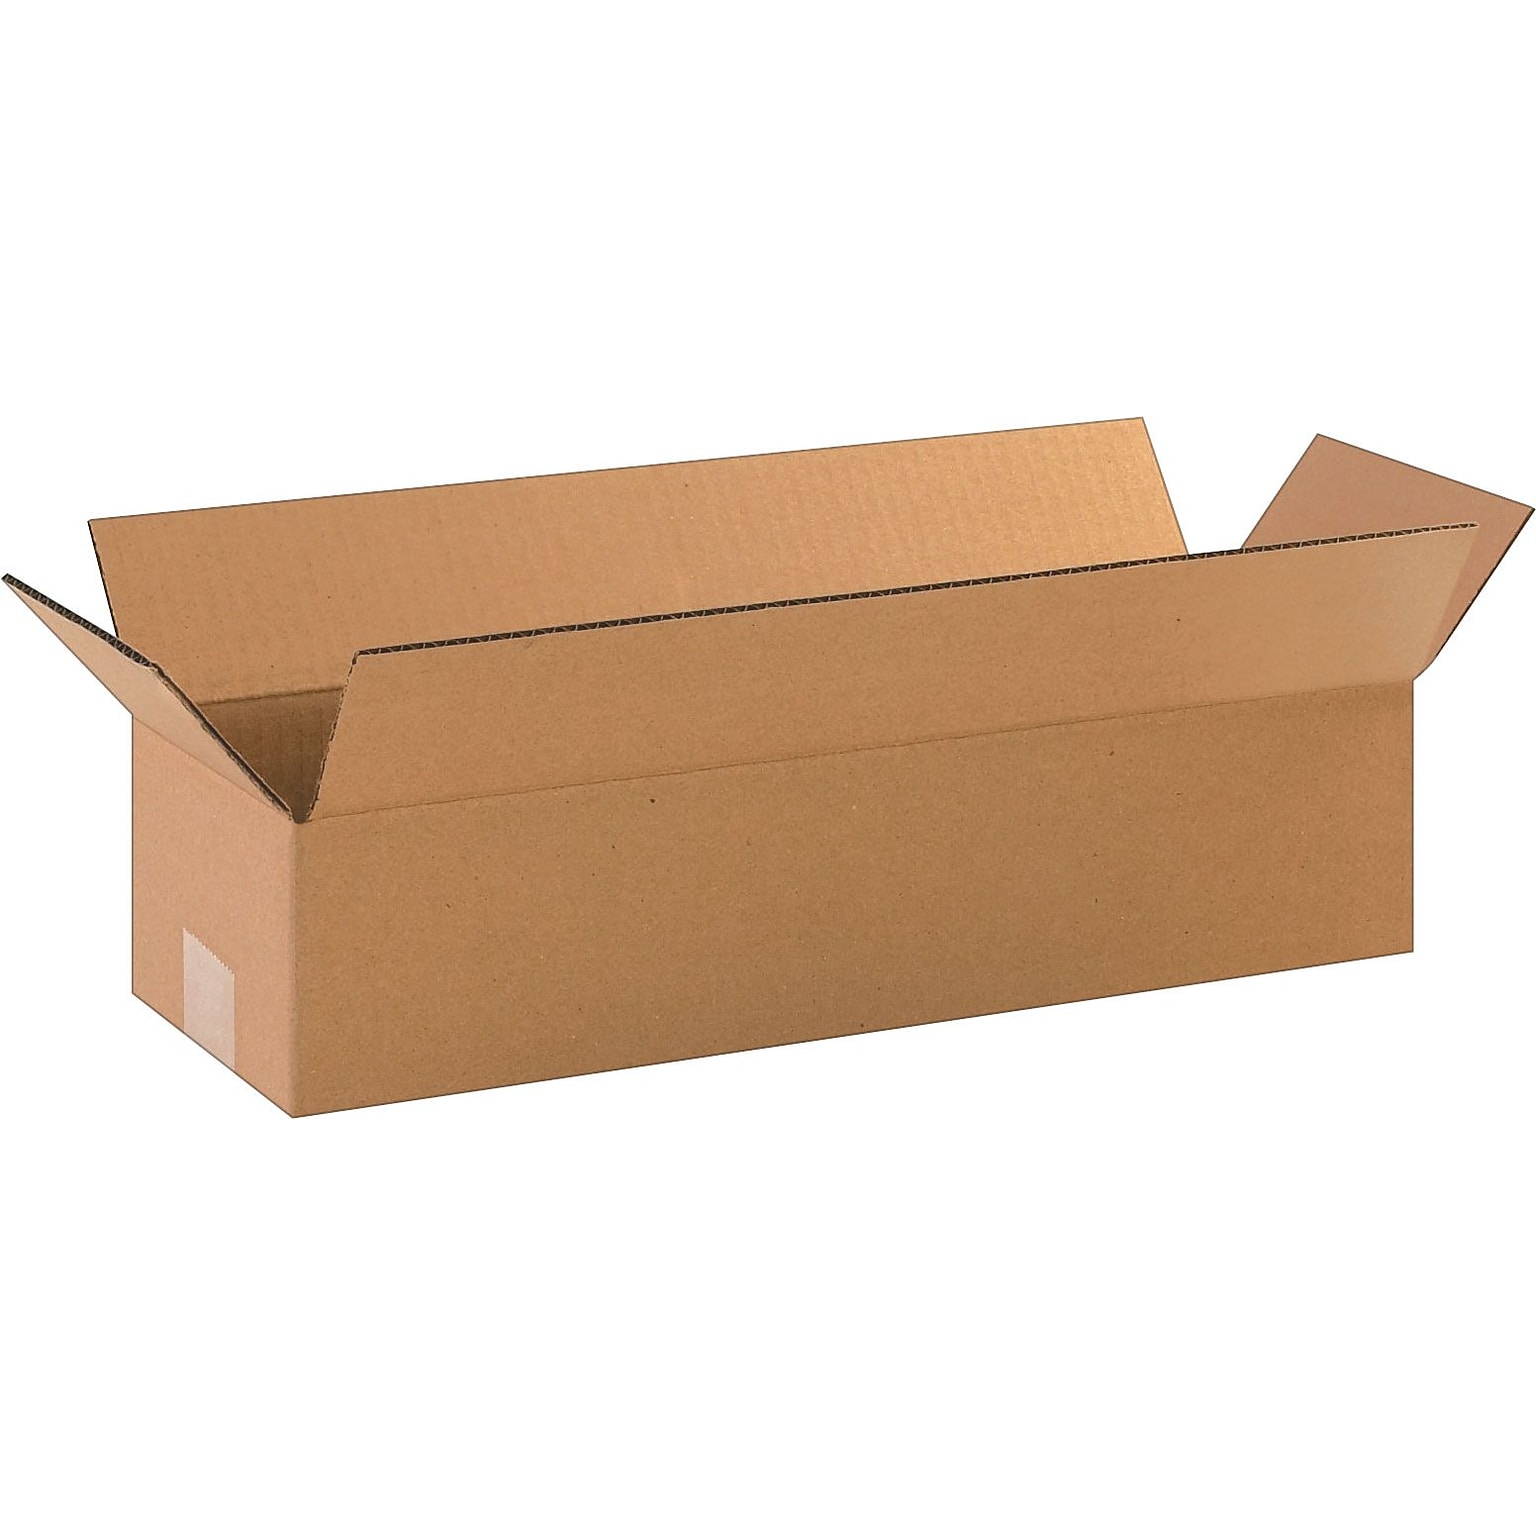 18 x 6 x 4 Shipping Boxes, 32 ECT, Brown, 25/Bundle (1864)